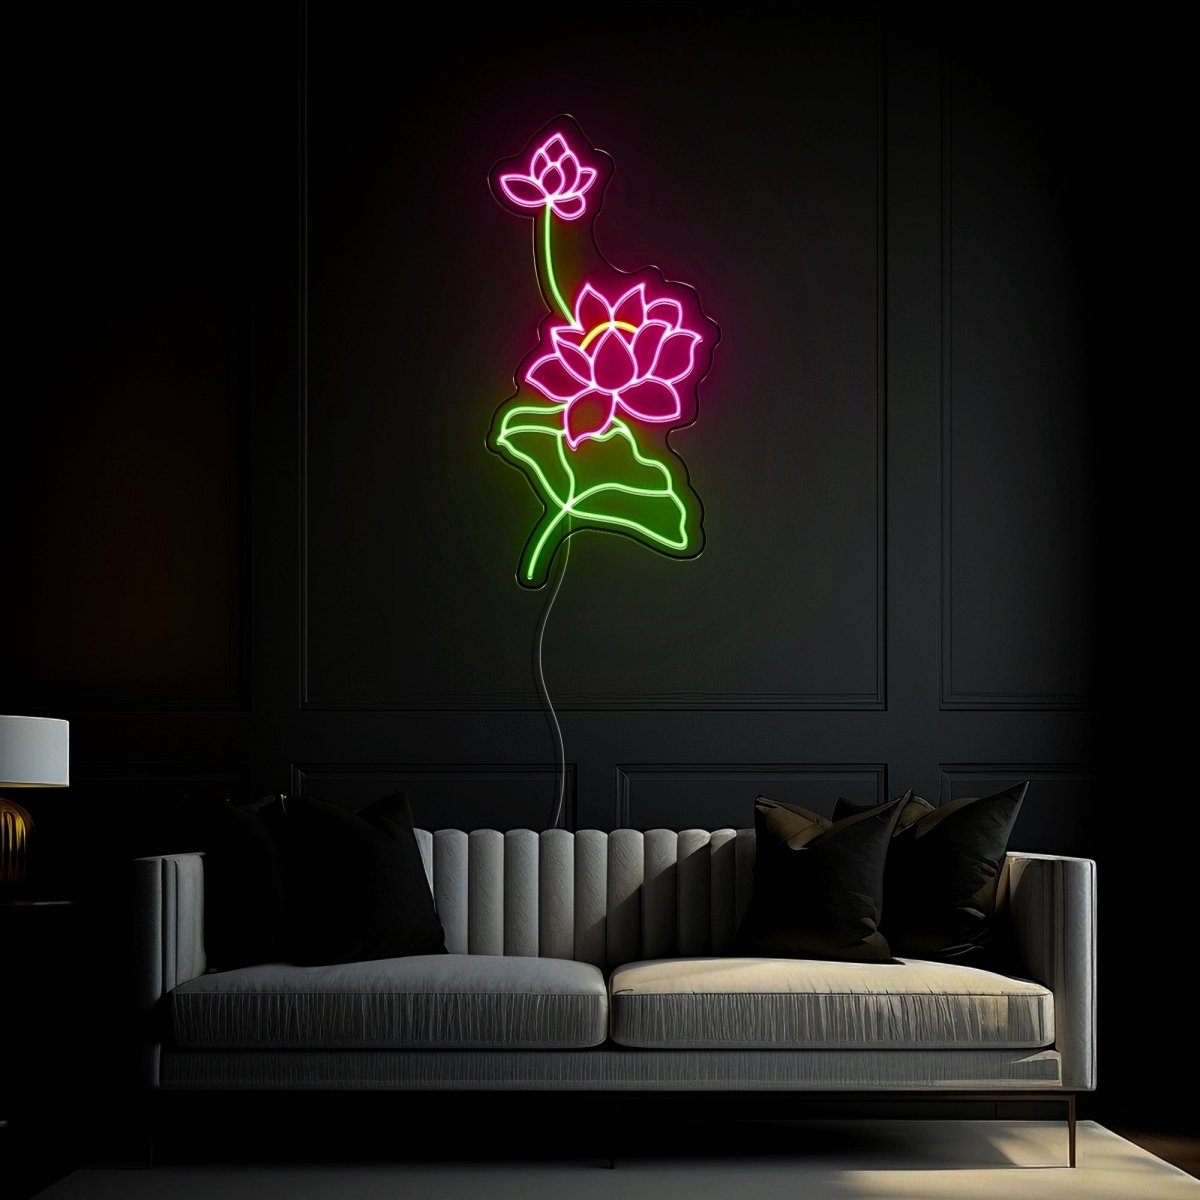 Lotus Led Neon Sign - Reels Custom